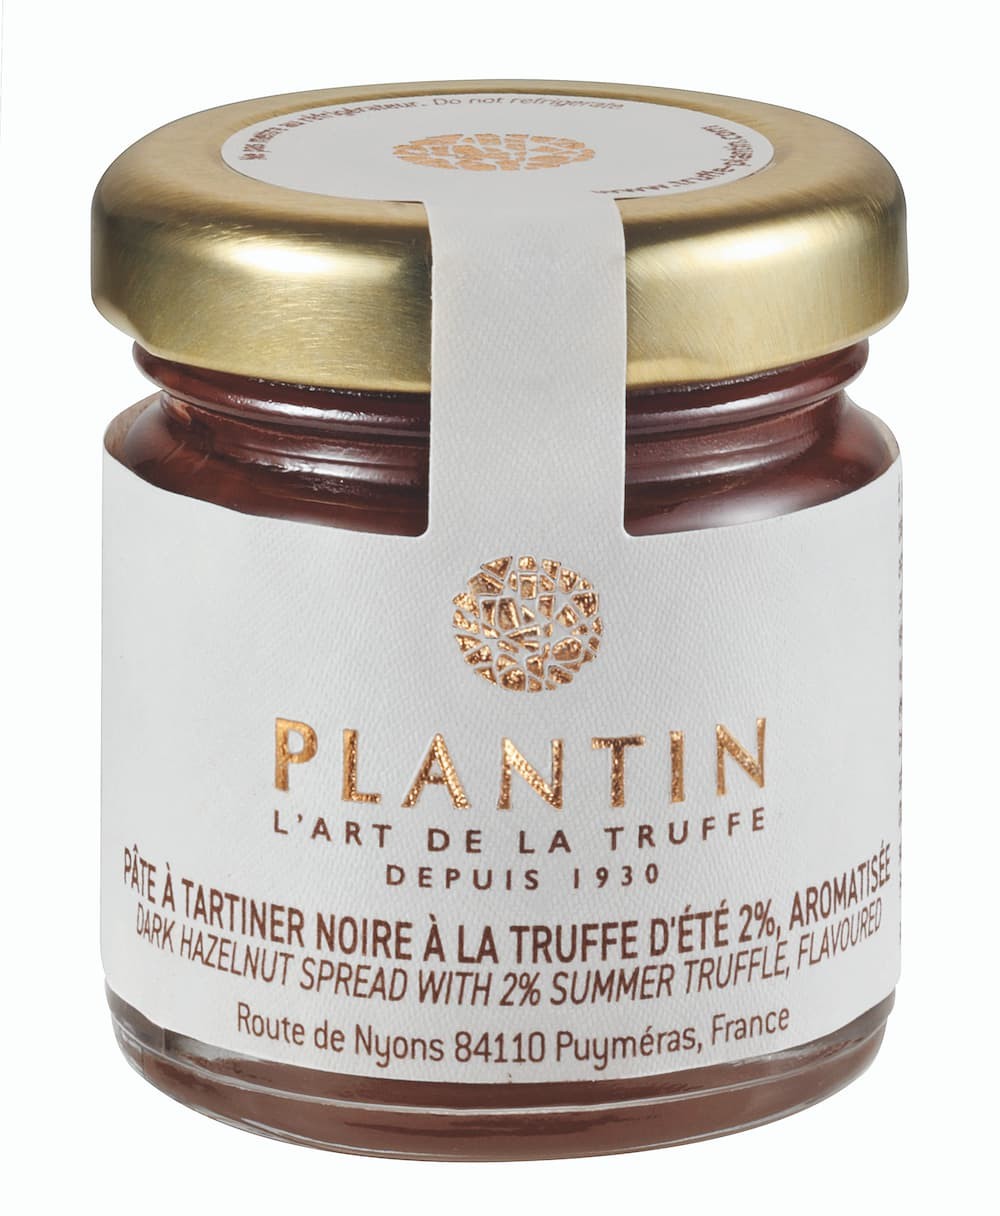 Dark hazelnut spread with summer truffles, truffle content 2% - 30 g